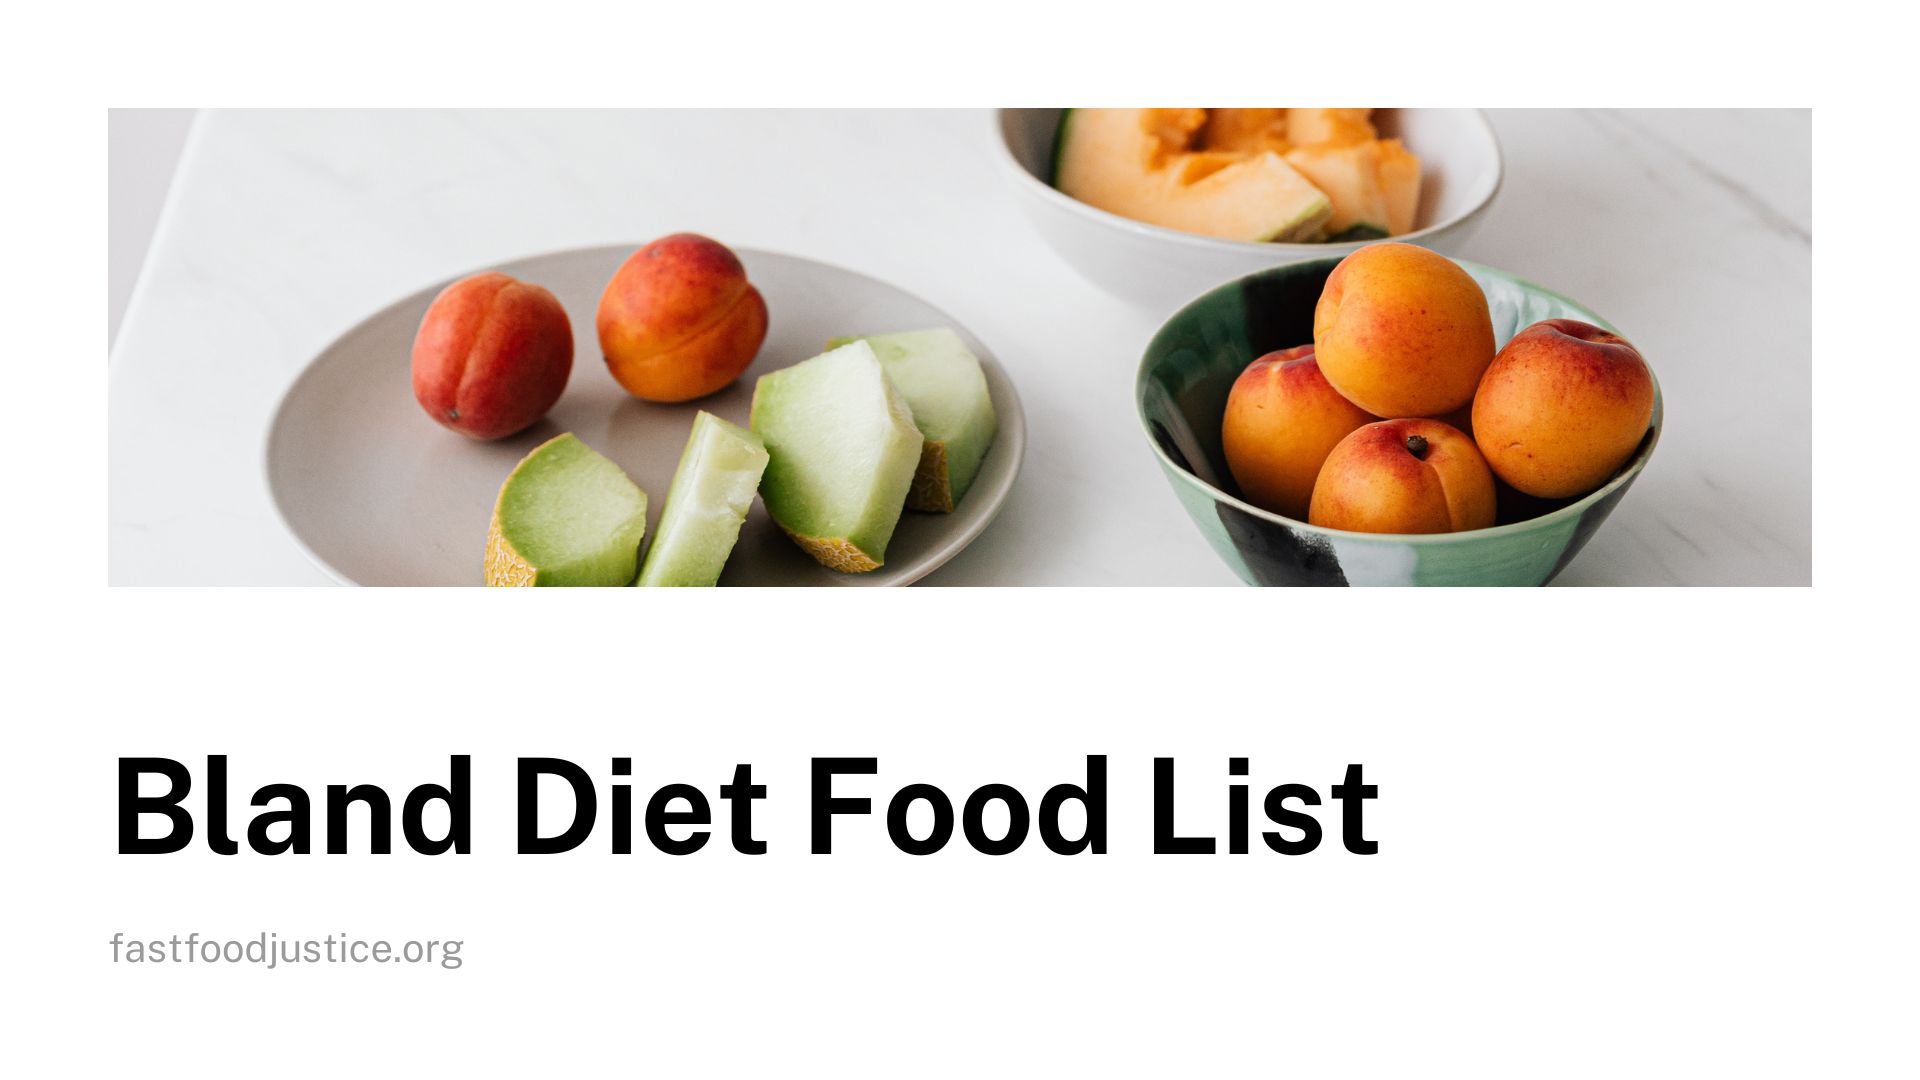 Bland Diet Food List Pdf Free Download Fast Food Justice